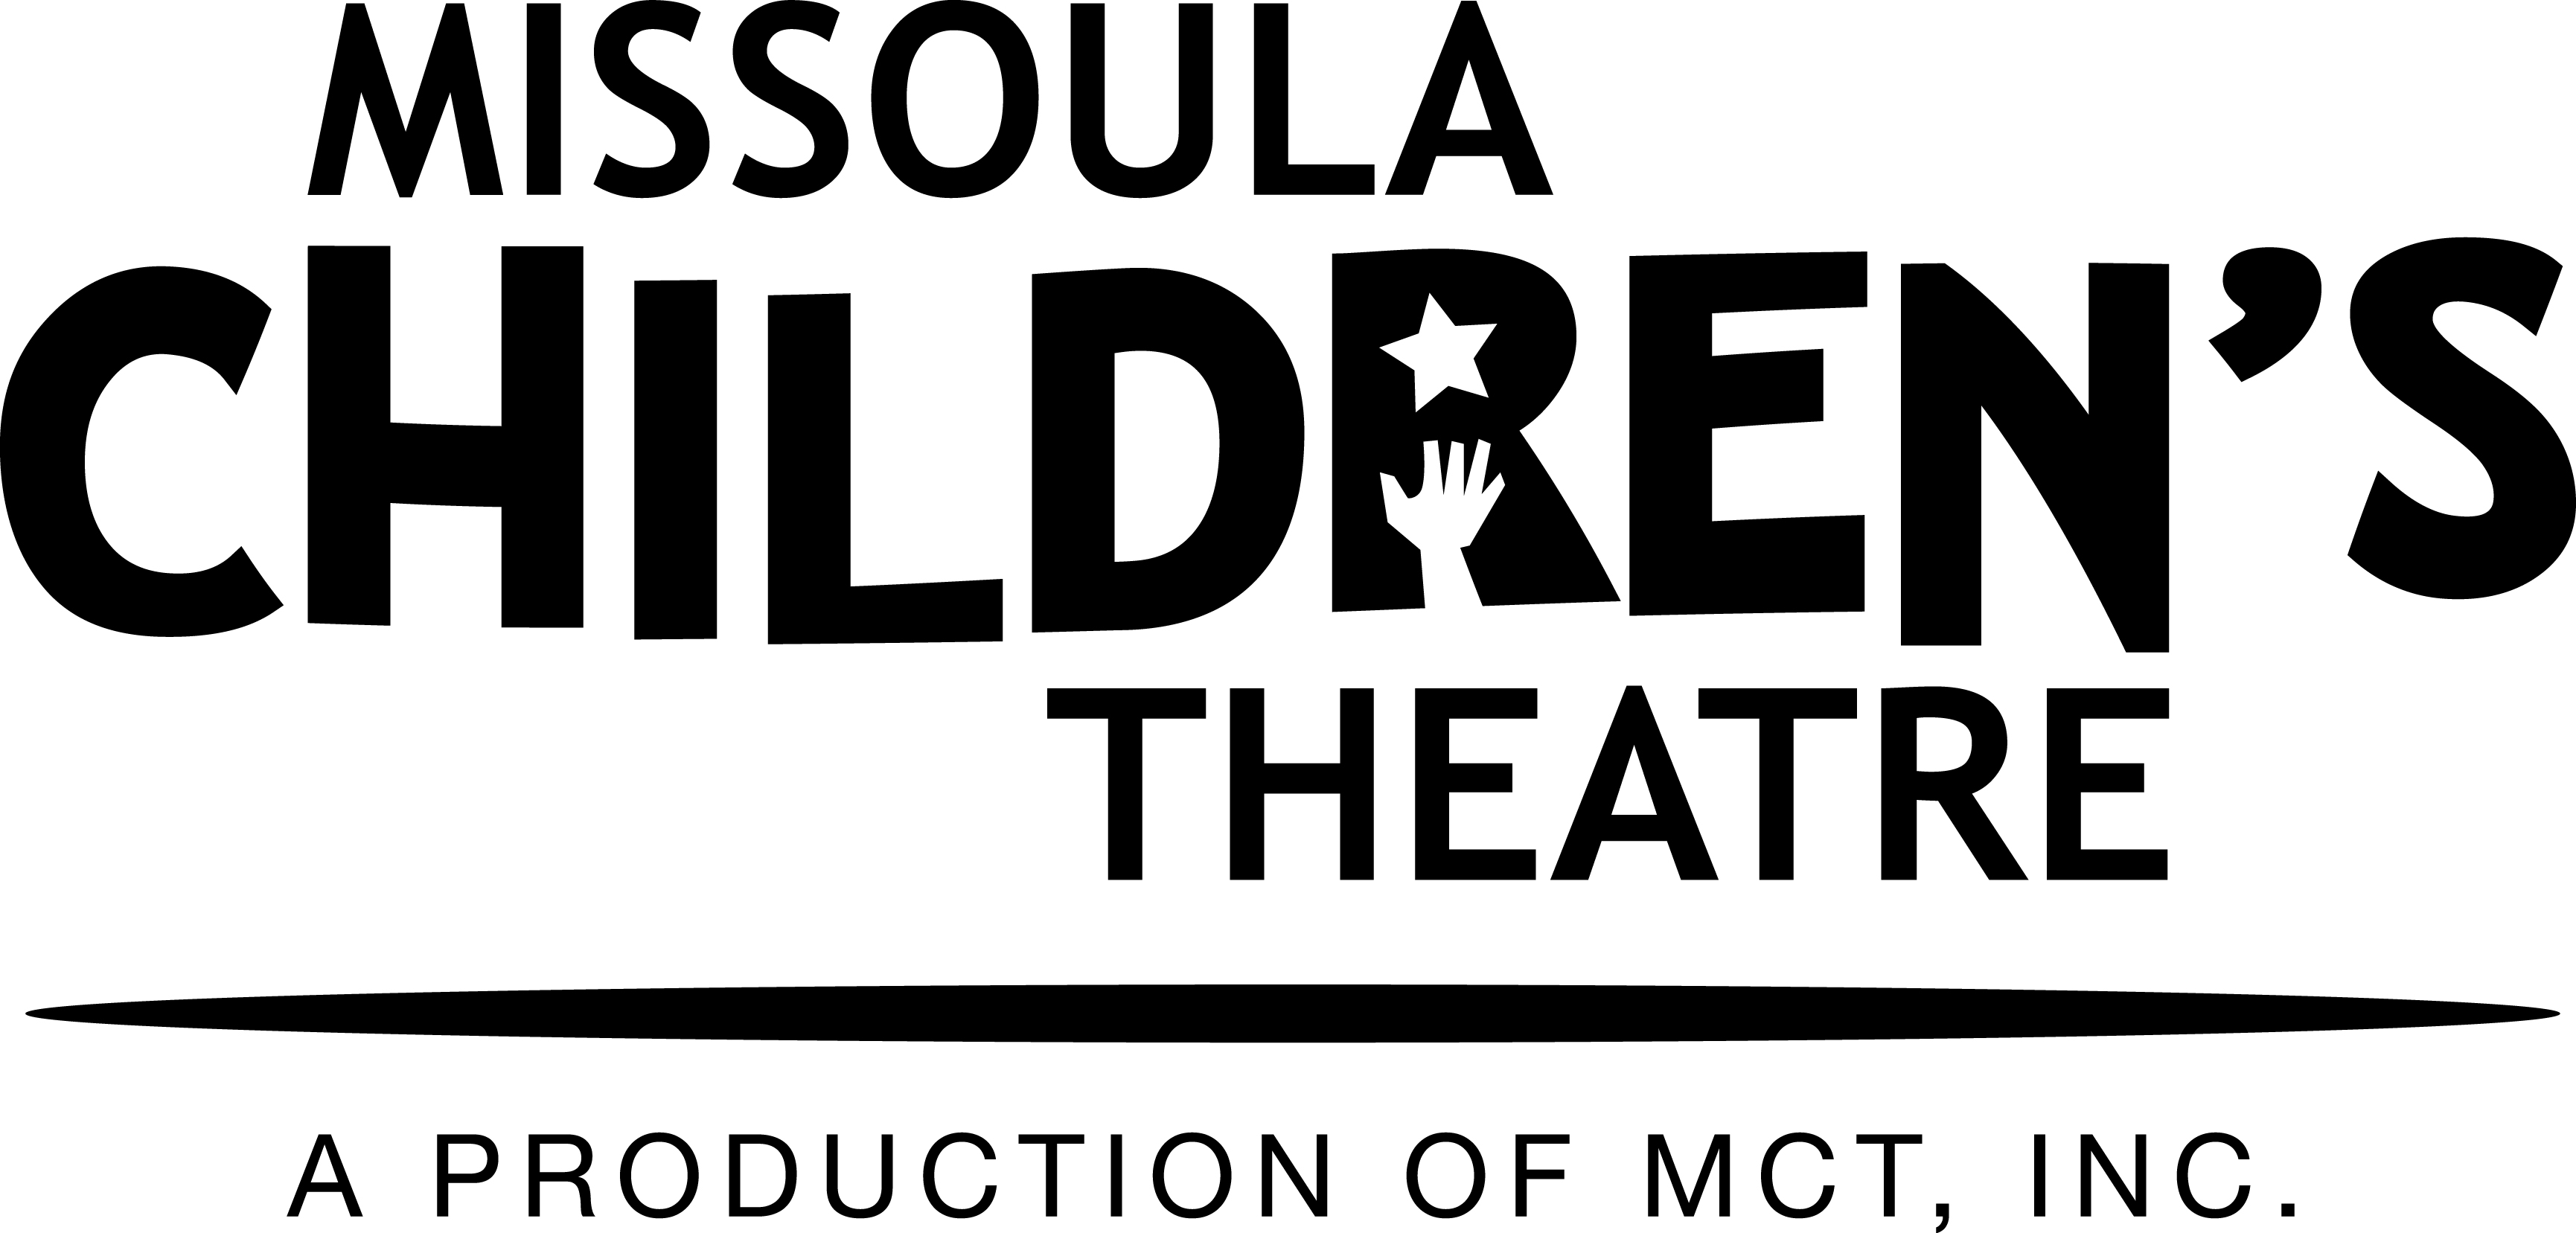 missoula chidrens theatre logo